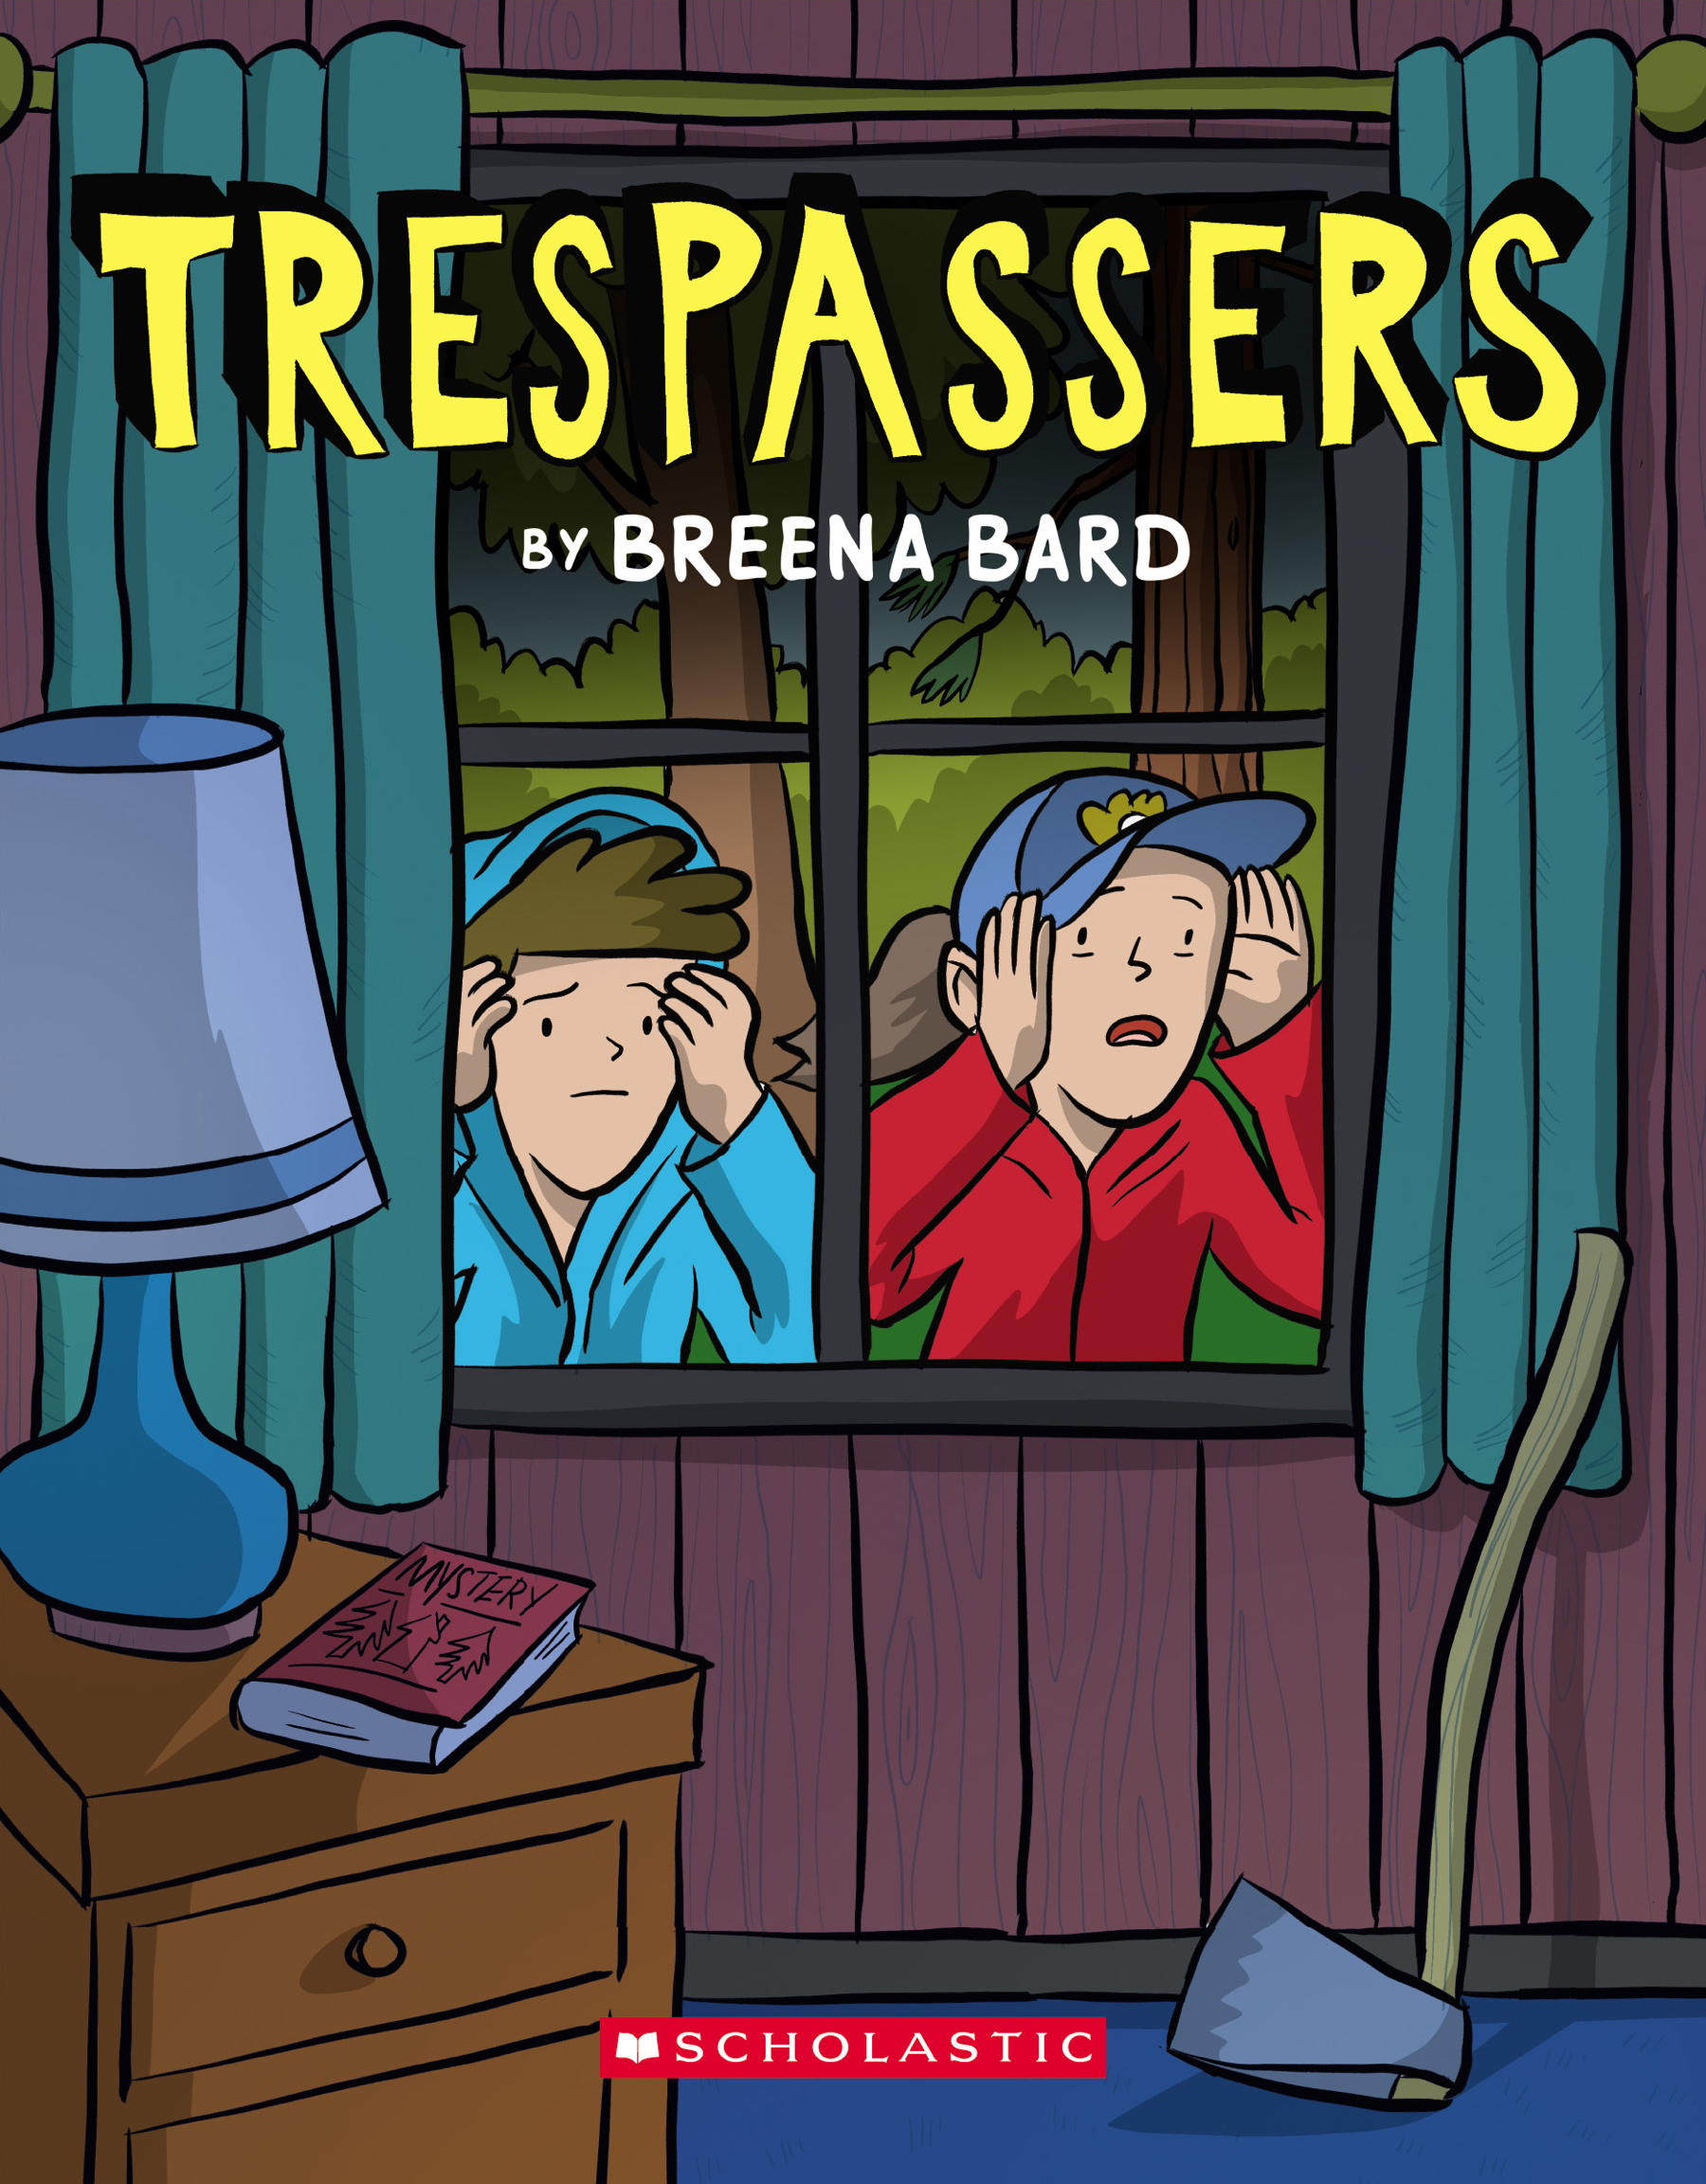 Trespassers by breena bard cover